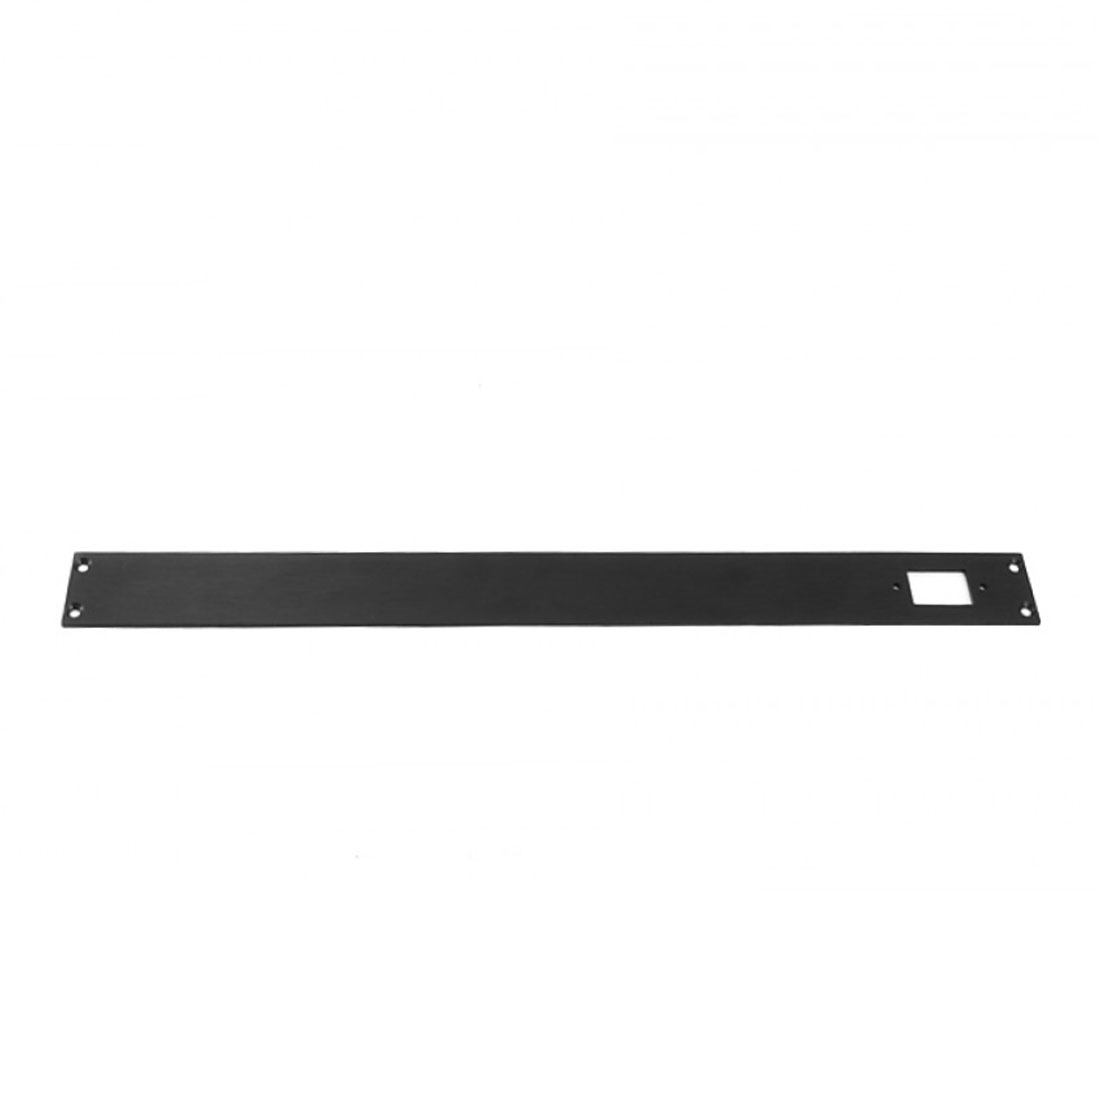 1NSL01280N - 1U rack krabice s lištou, 280mm, 10mm - panel černý